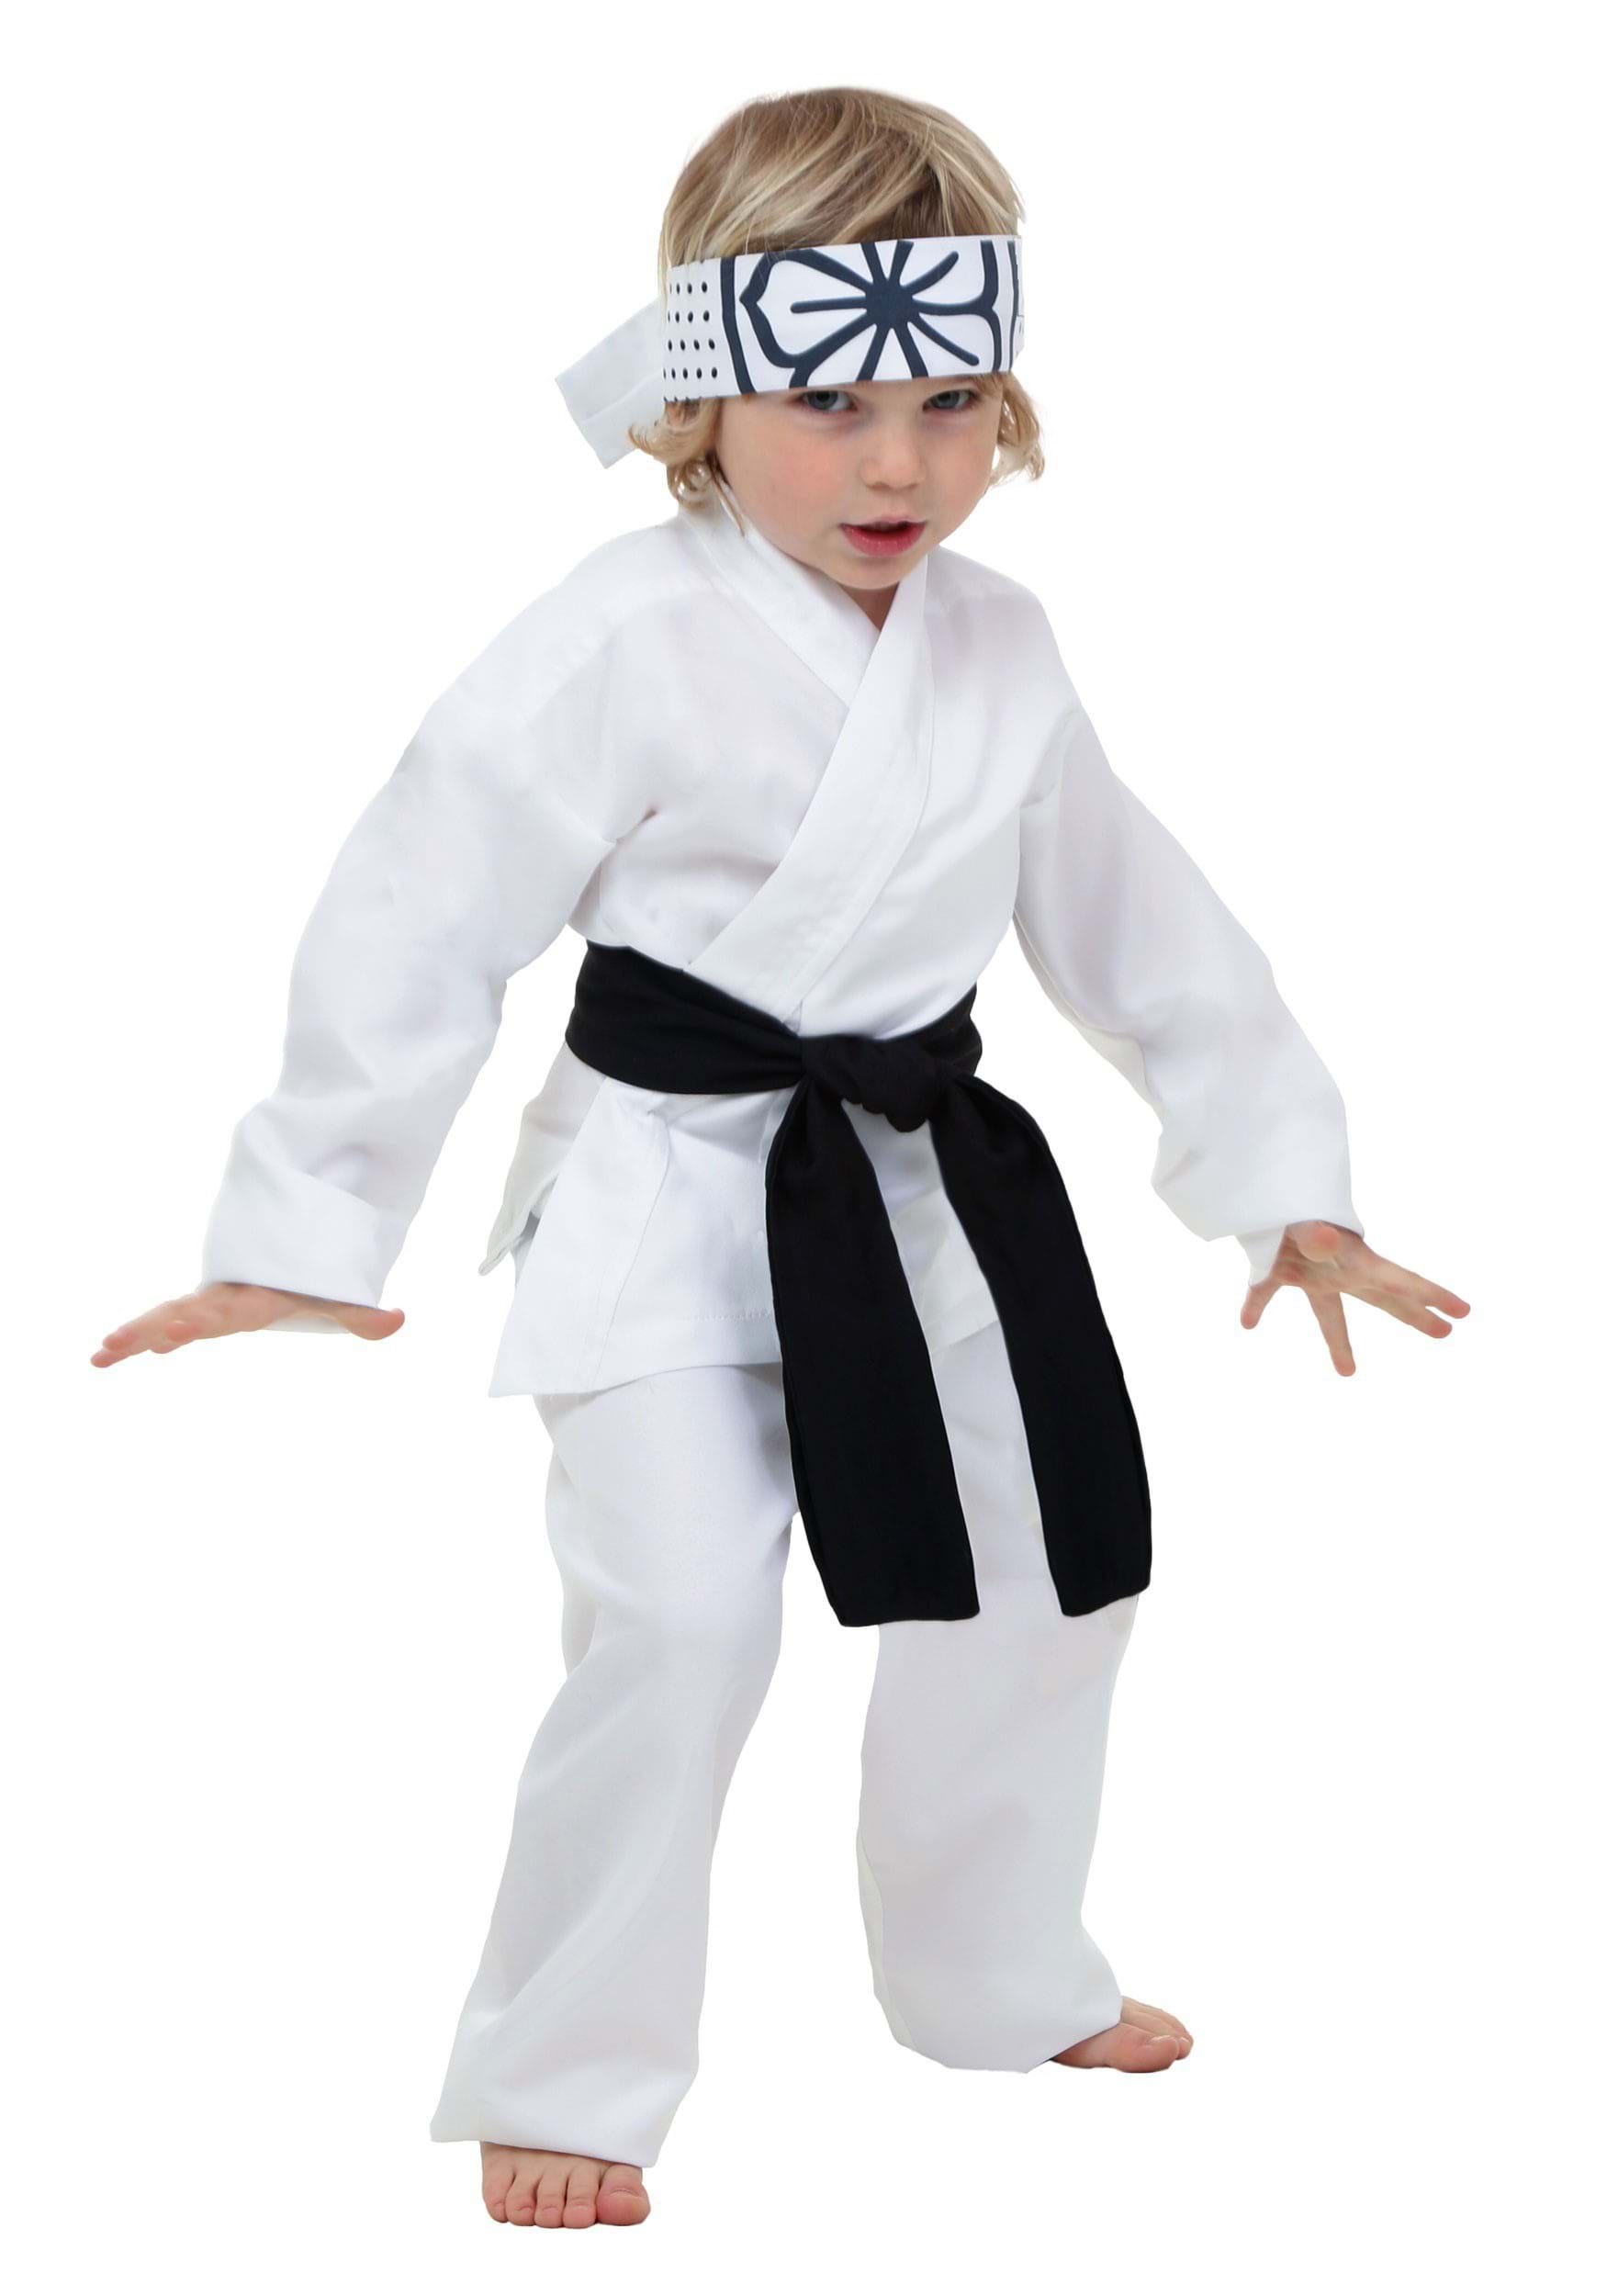 Toddler Karate Kid Daniel San Costume